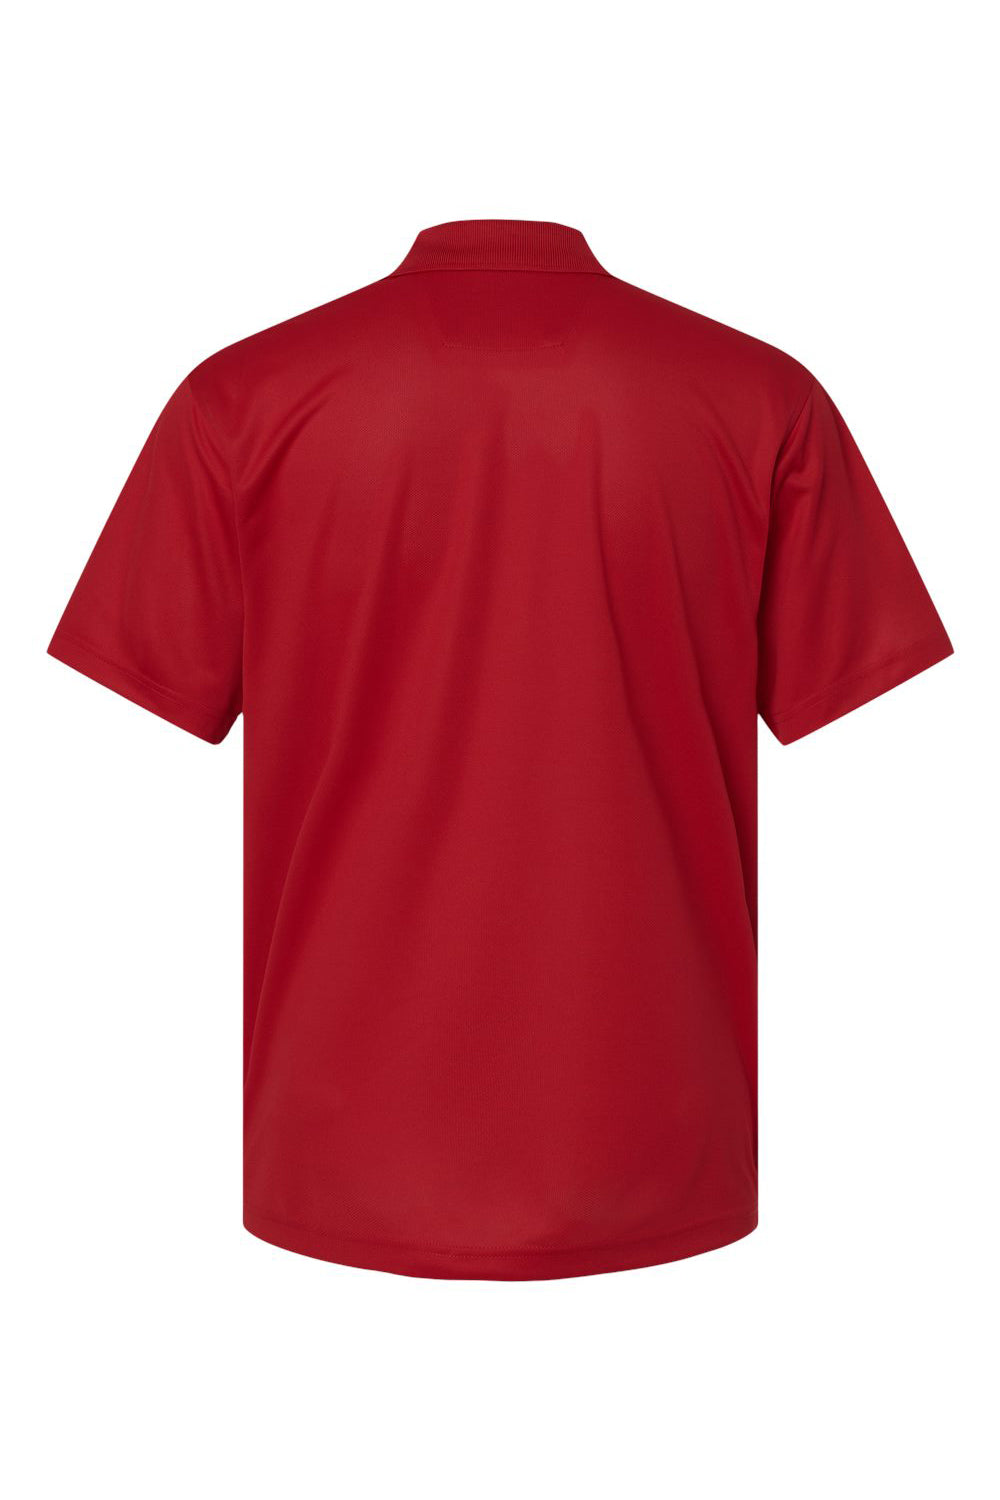 Paragon 100 Mens Saratoga Performance Mini Mesh Short Sleeve Polo Shirt Cardinal Red Flat Back